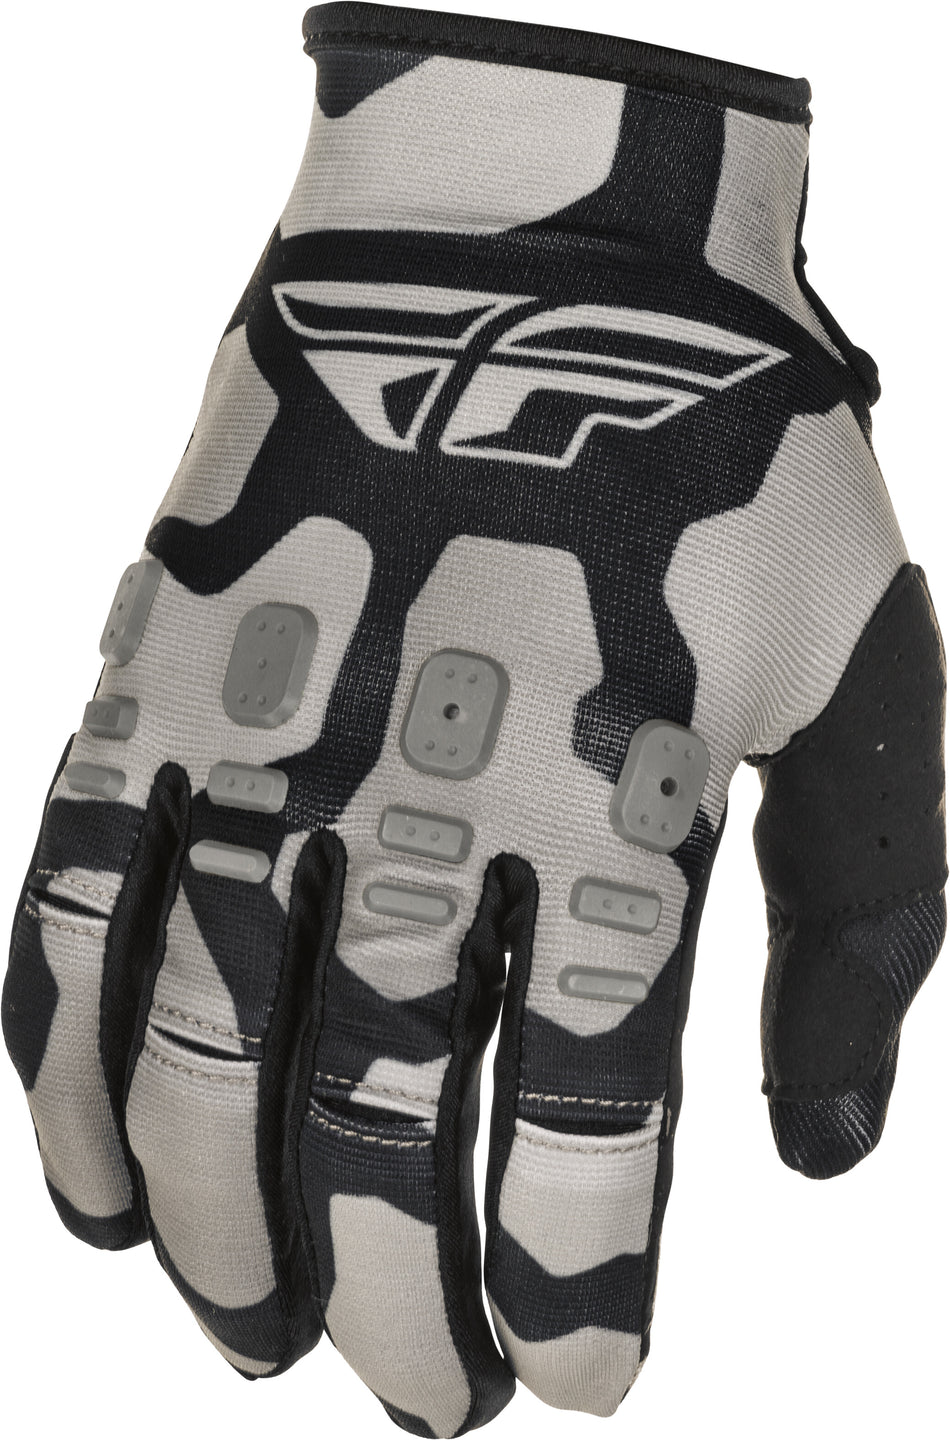 FLY RACING Kinetic K221 Gloves Black/Grey Sz 11 374-51011